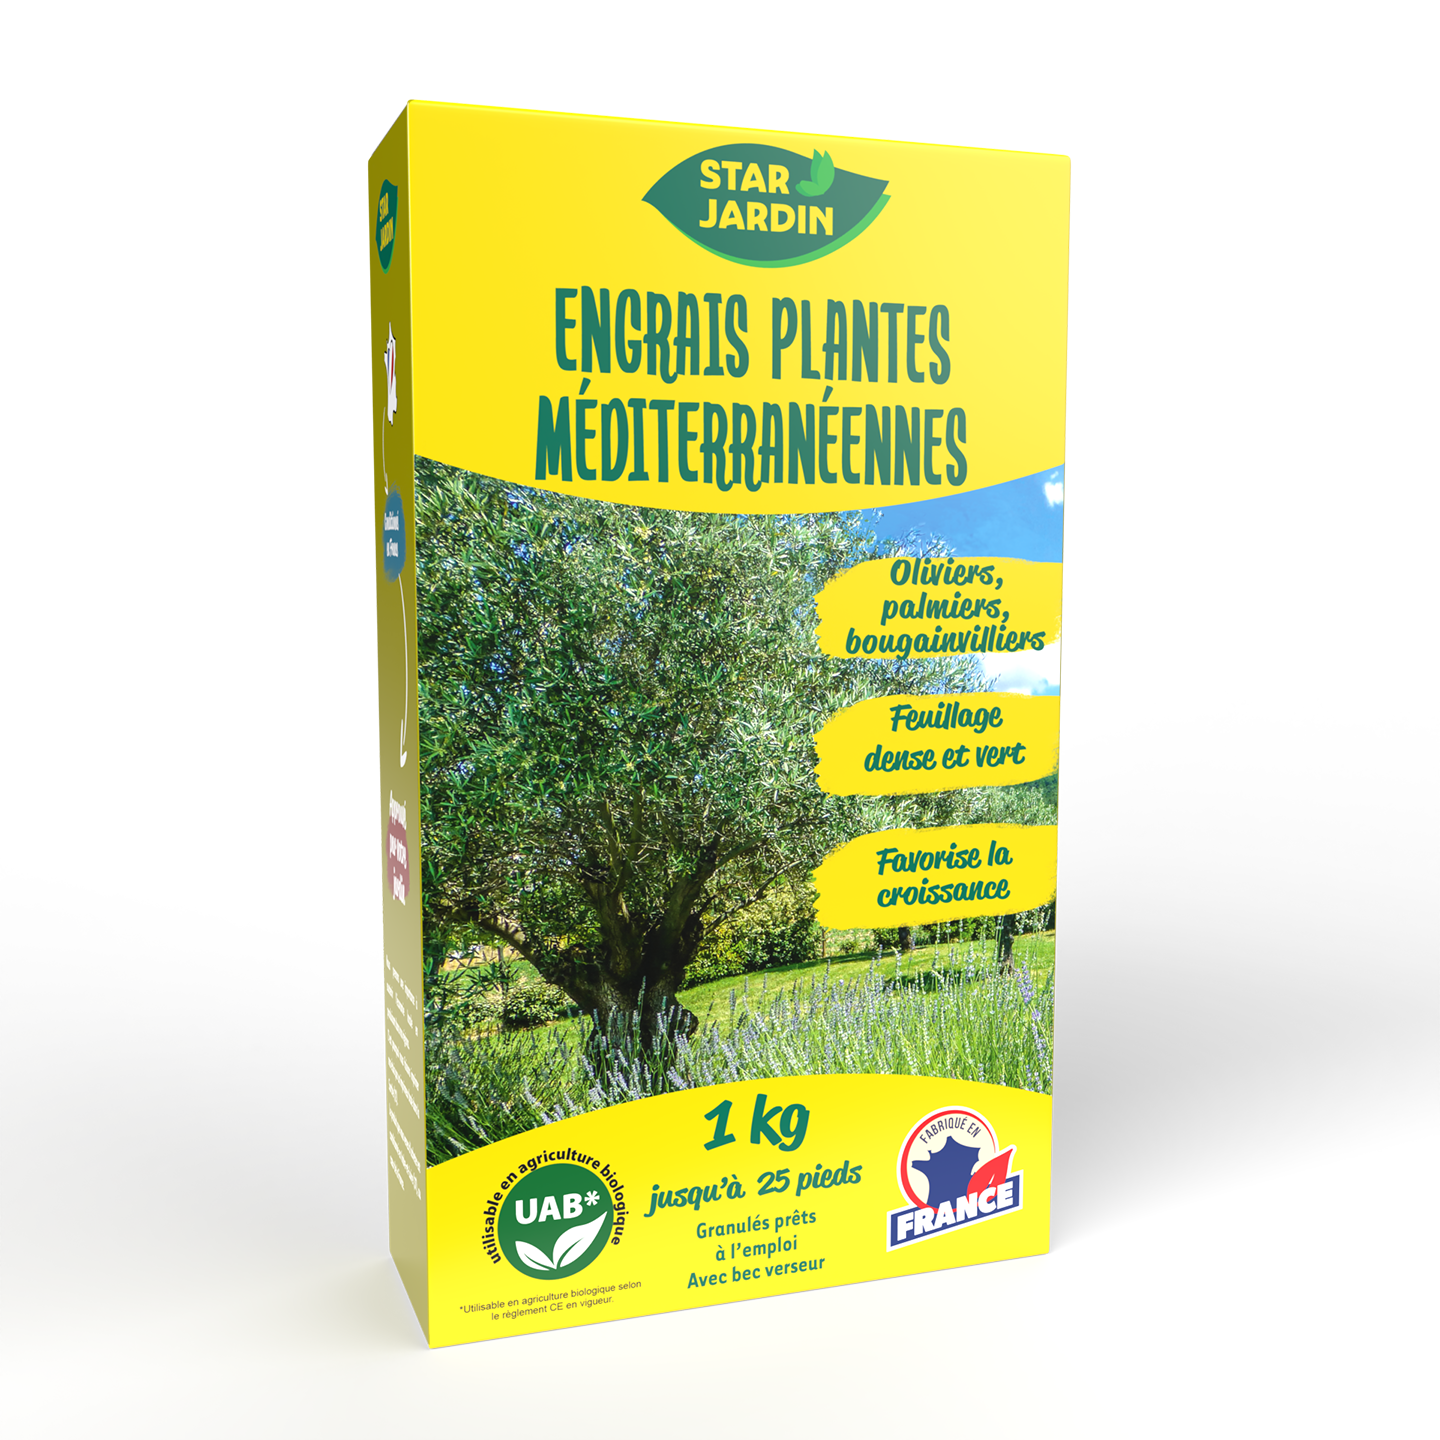 ENGRAIS AGRUMES & PLANTES MEDITERRANEE 750GR